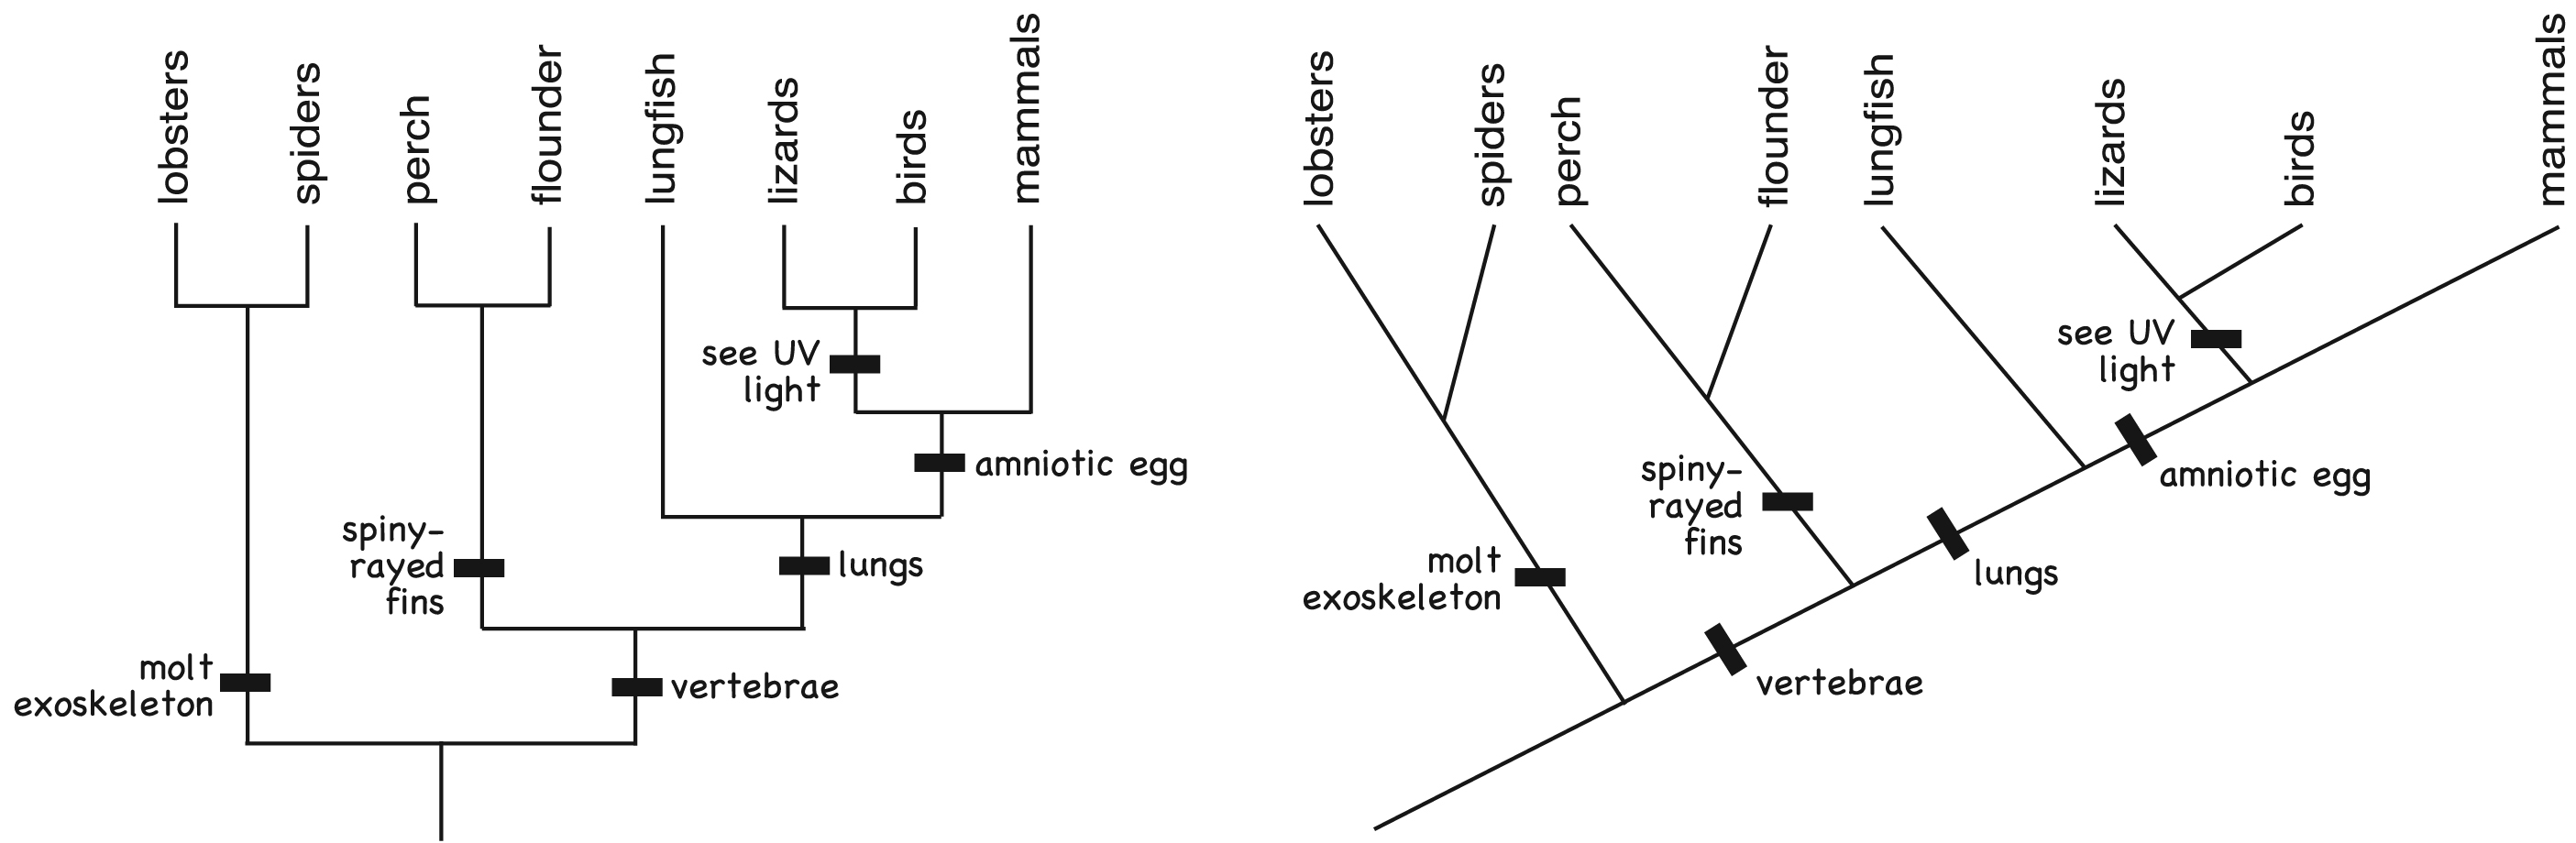 cladogram formats